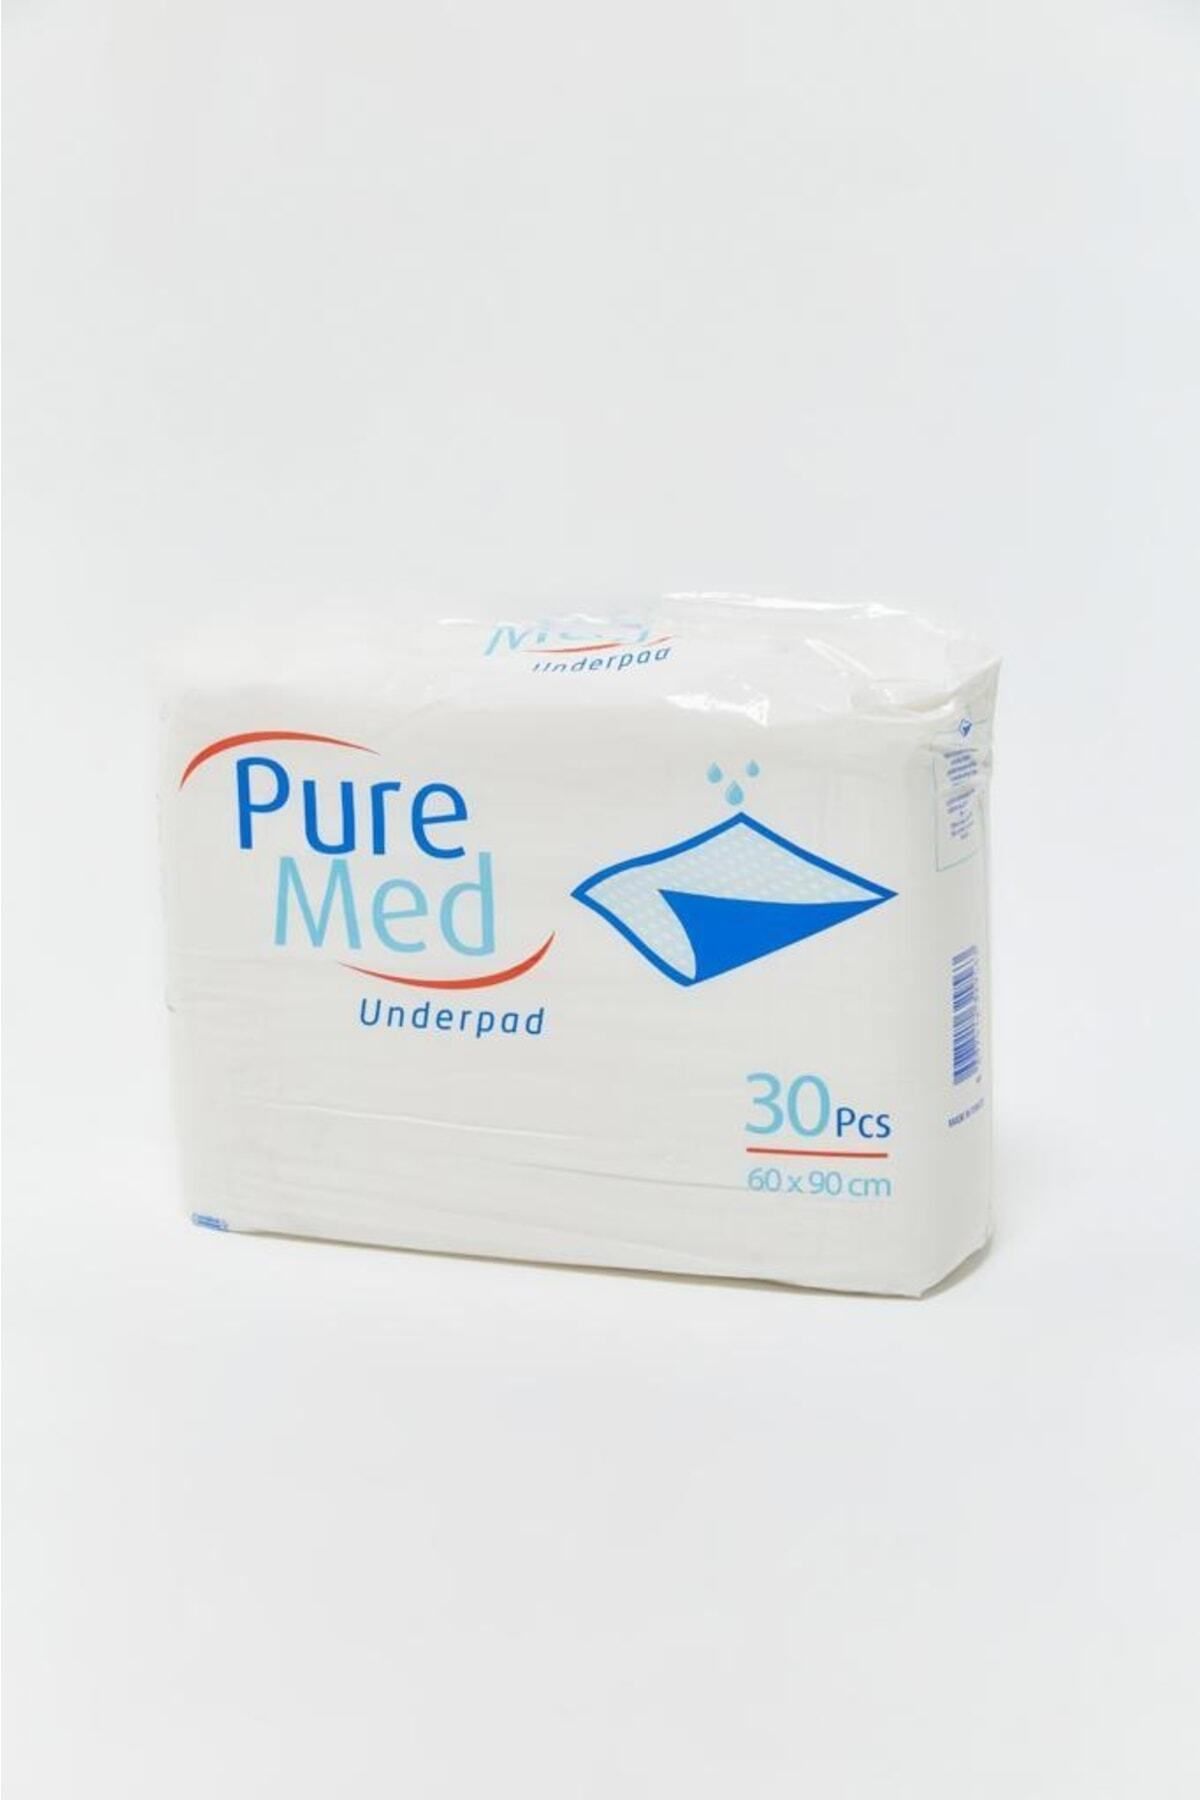 Puremed Pure Med Yatak Koruyucu Örtü 60x90 (30lu Paket)